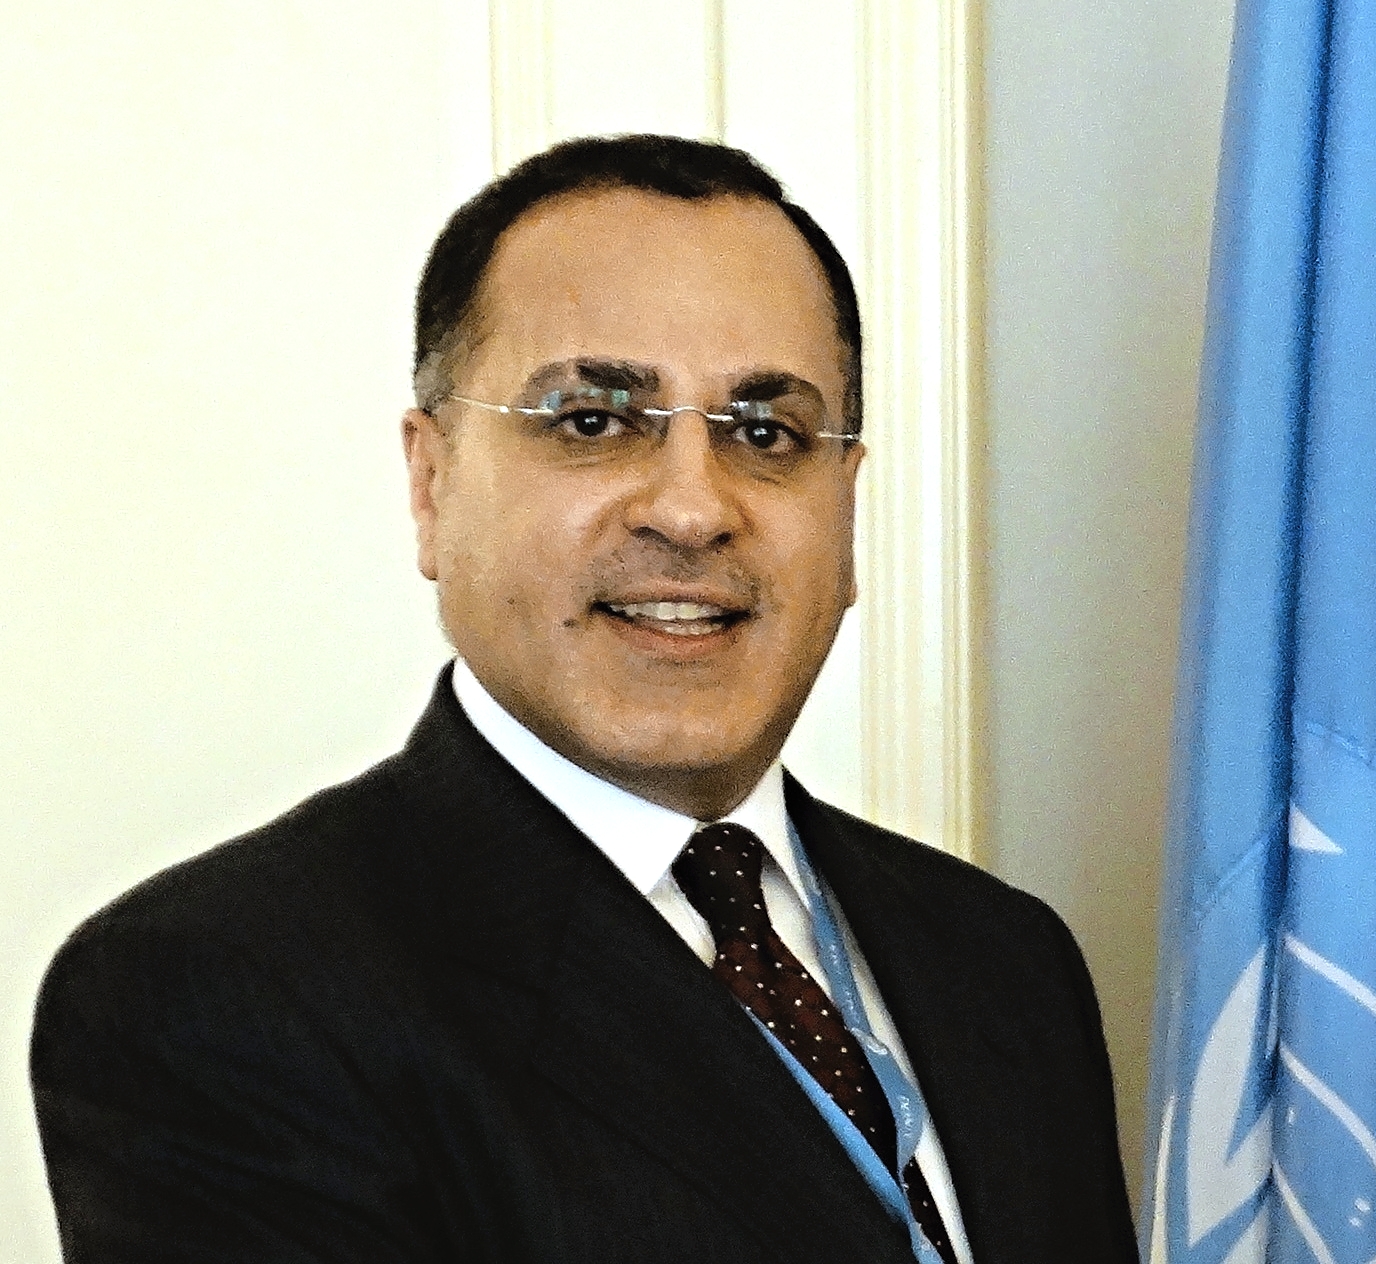 Kuwait's permanent delegate to the UN Ambassador Jamal Al-Ghunaim